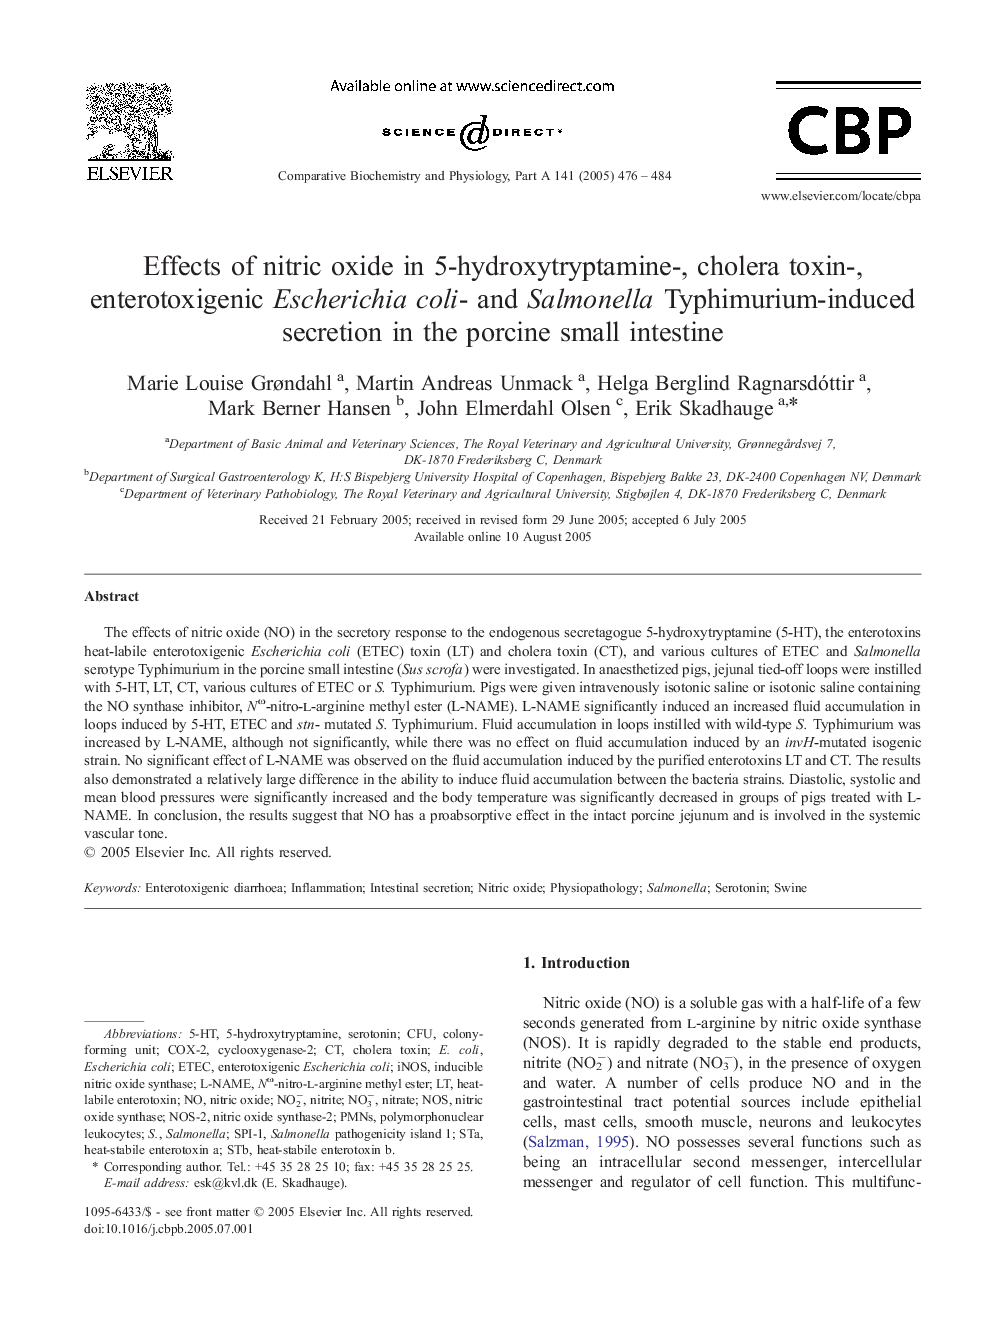 Effects of nitric oxide in 5-hydroxytryptamine-, cholera toxin-, enterotoxigenic Escherichia coli- and Salmonella Typhimurium-induced secretion in the porcine small intestine